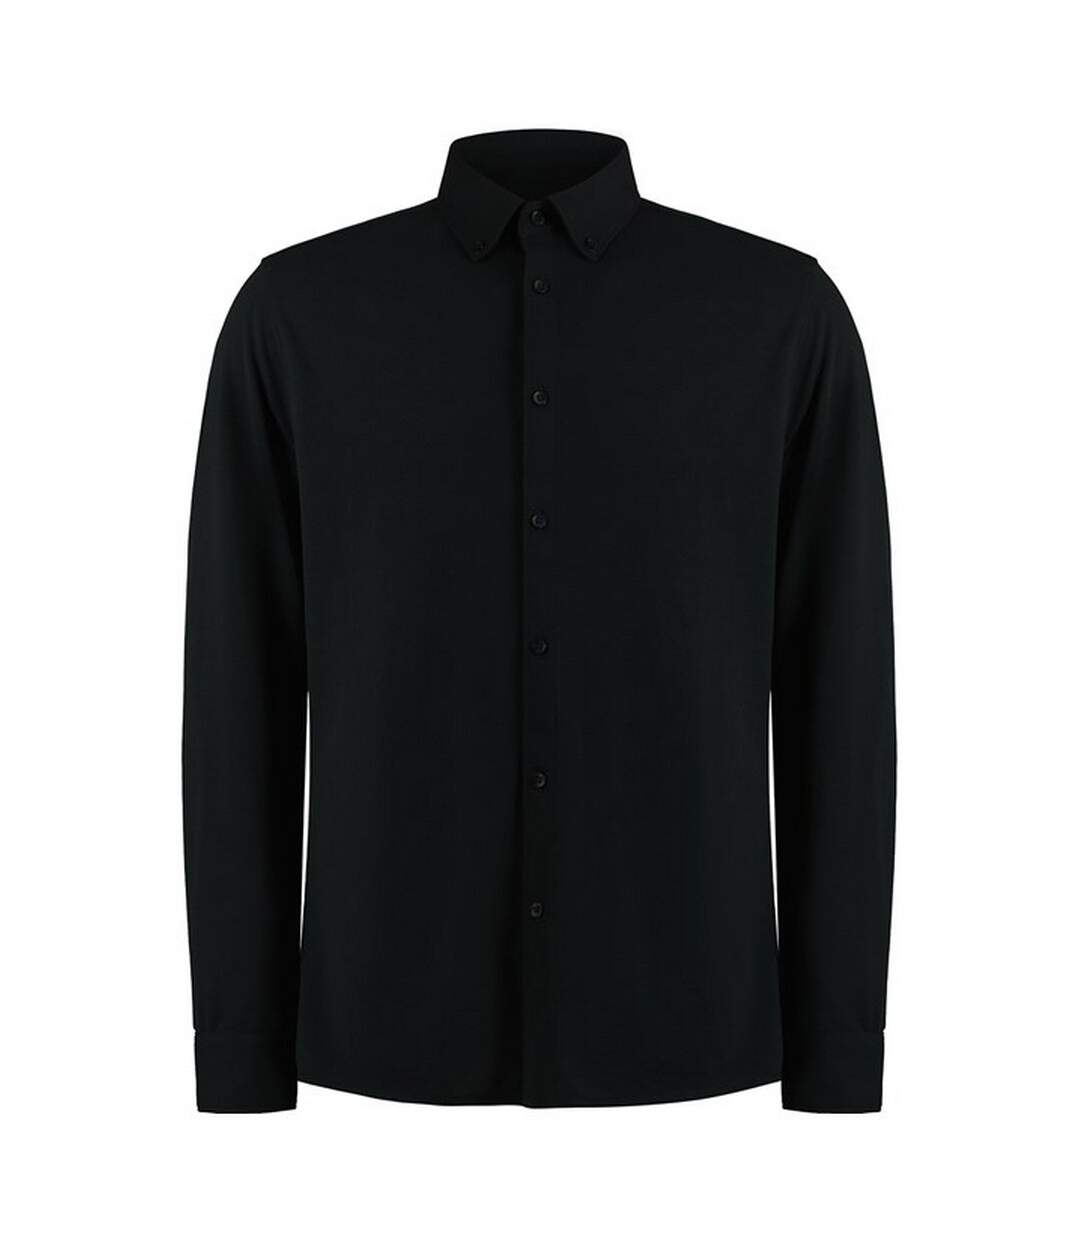 Kustom Kit Mens Superwash 60°C Tailored Long-Sleeved Shirt (Black)